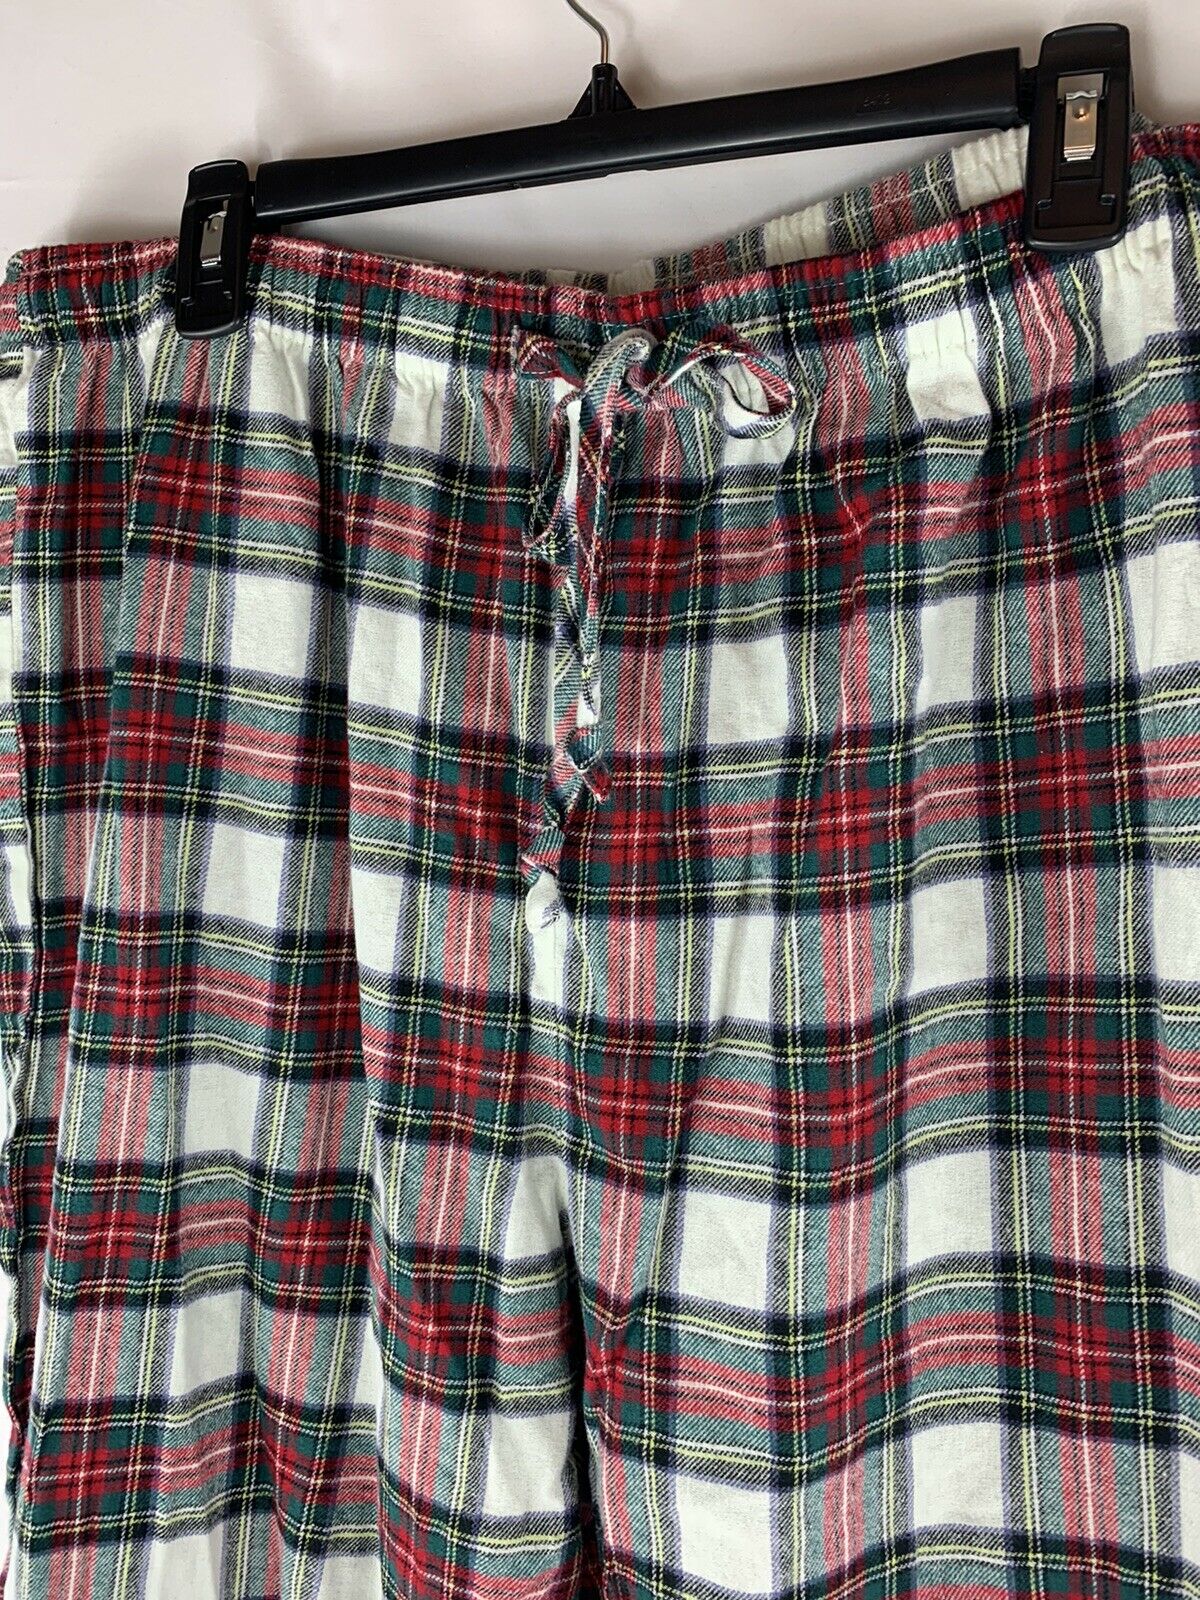 Family PJs Matching Holiday Plaid 1 Piece Pants Men XL